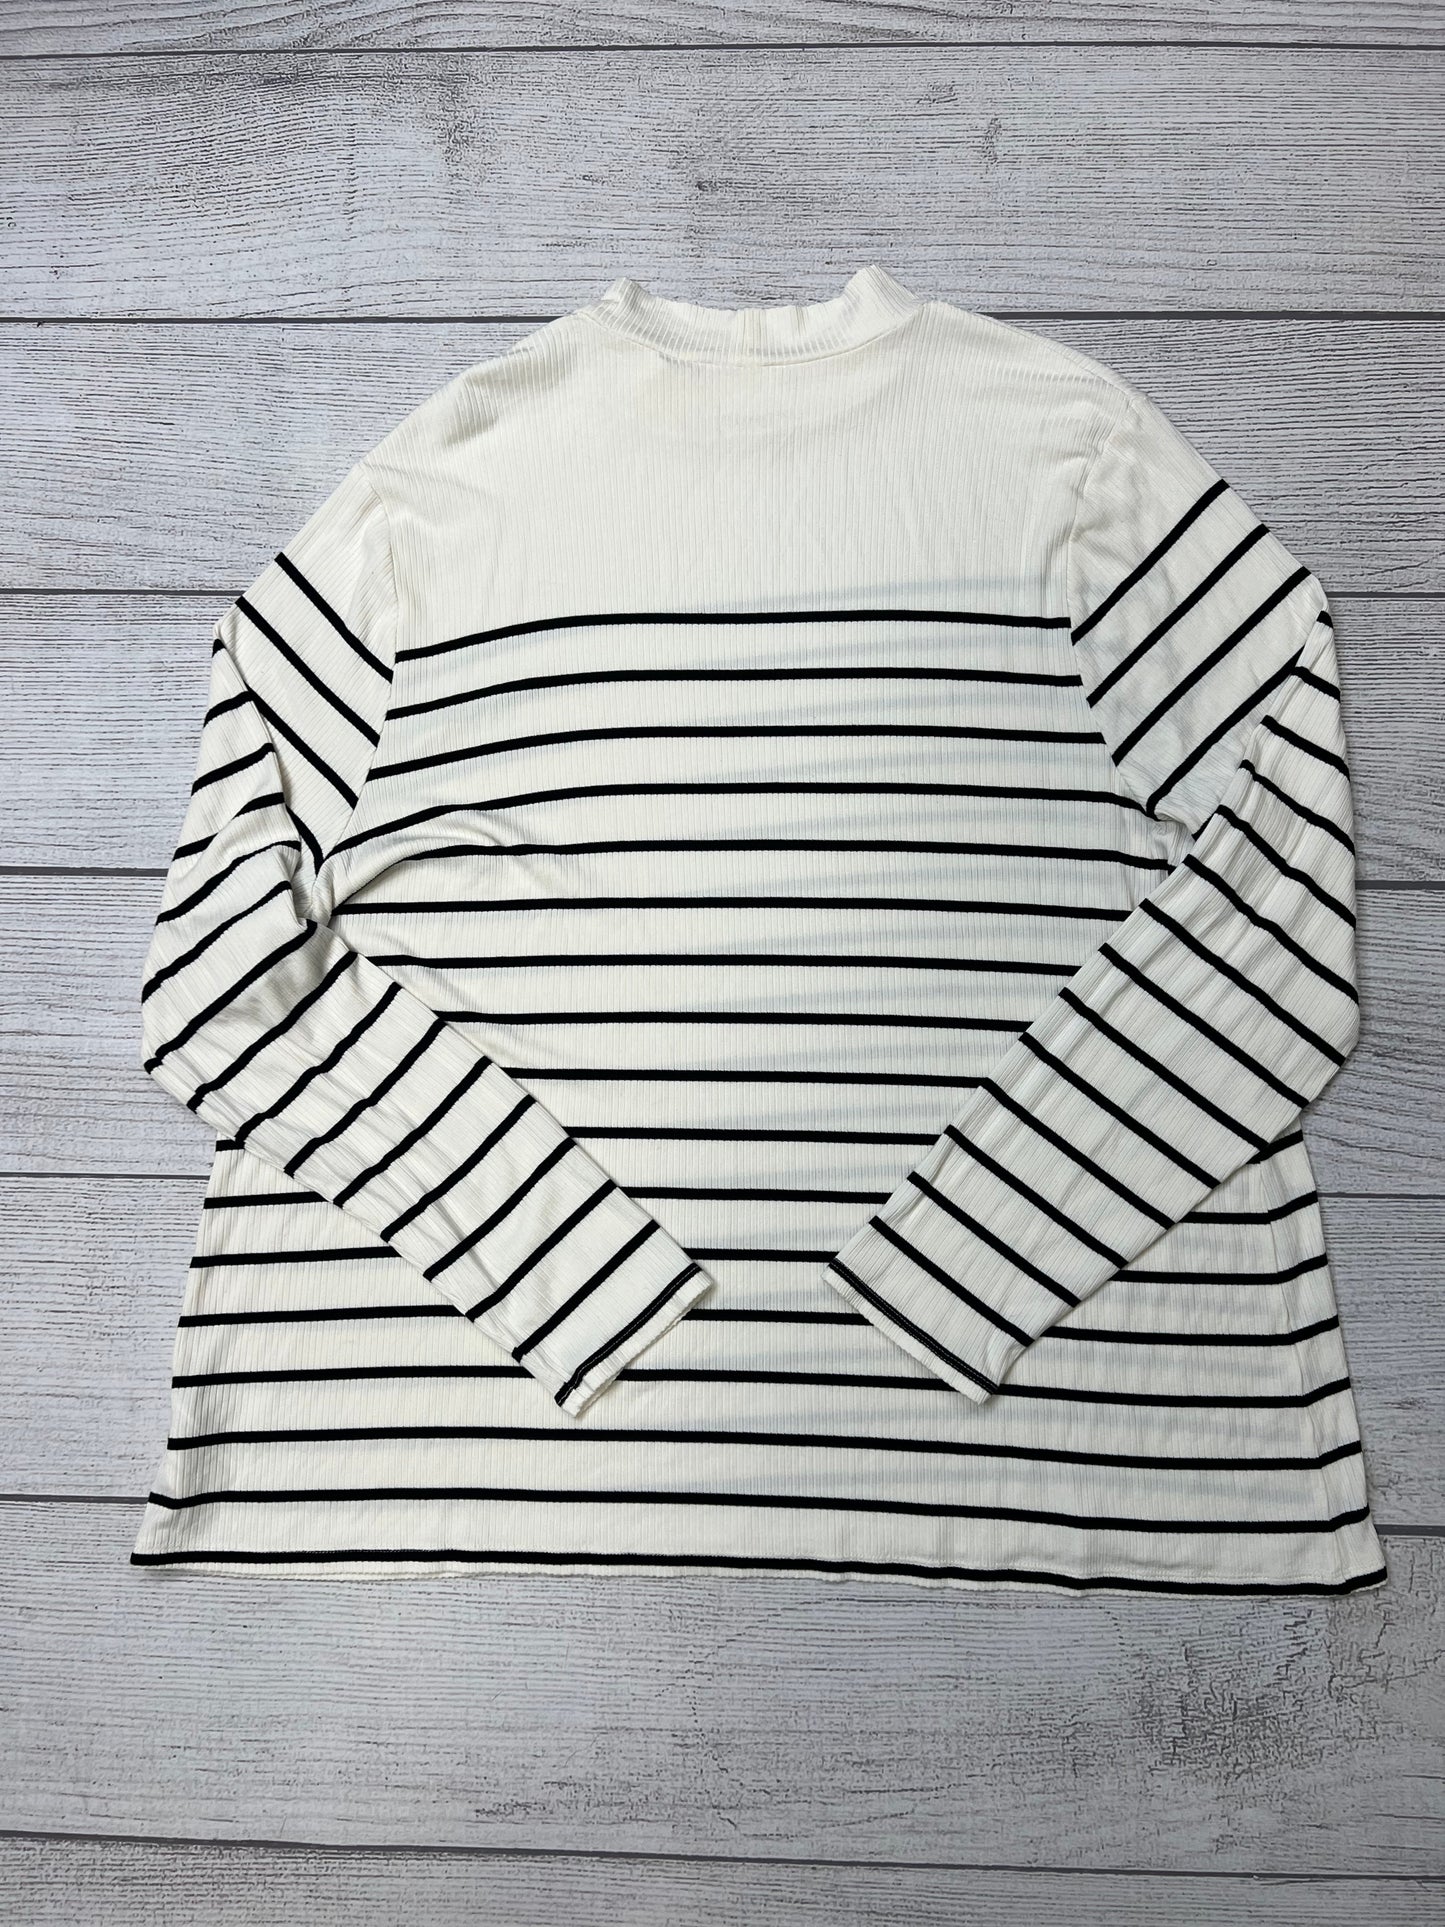 Striped Top Long Sleeve Basic Ava & Viv, Size 3x